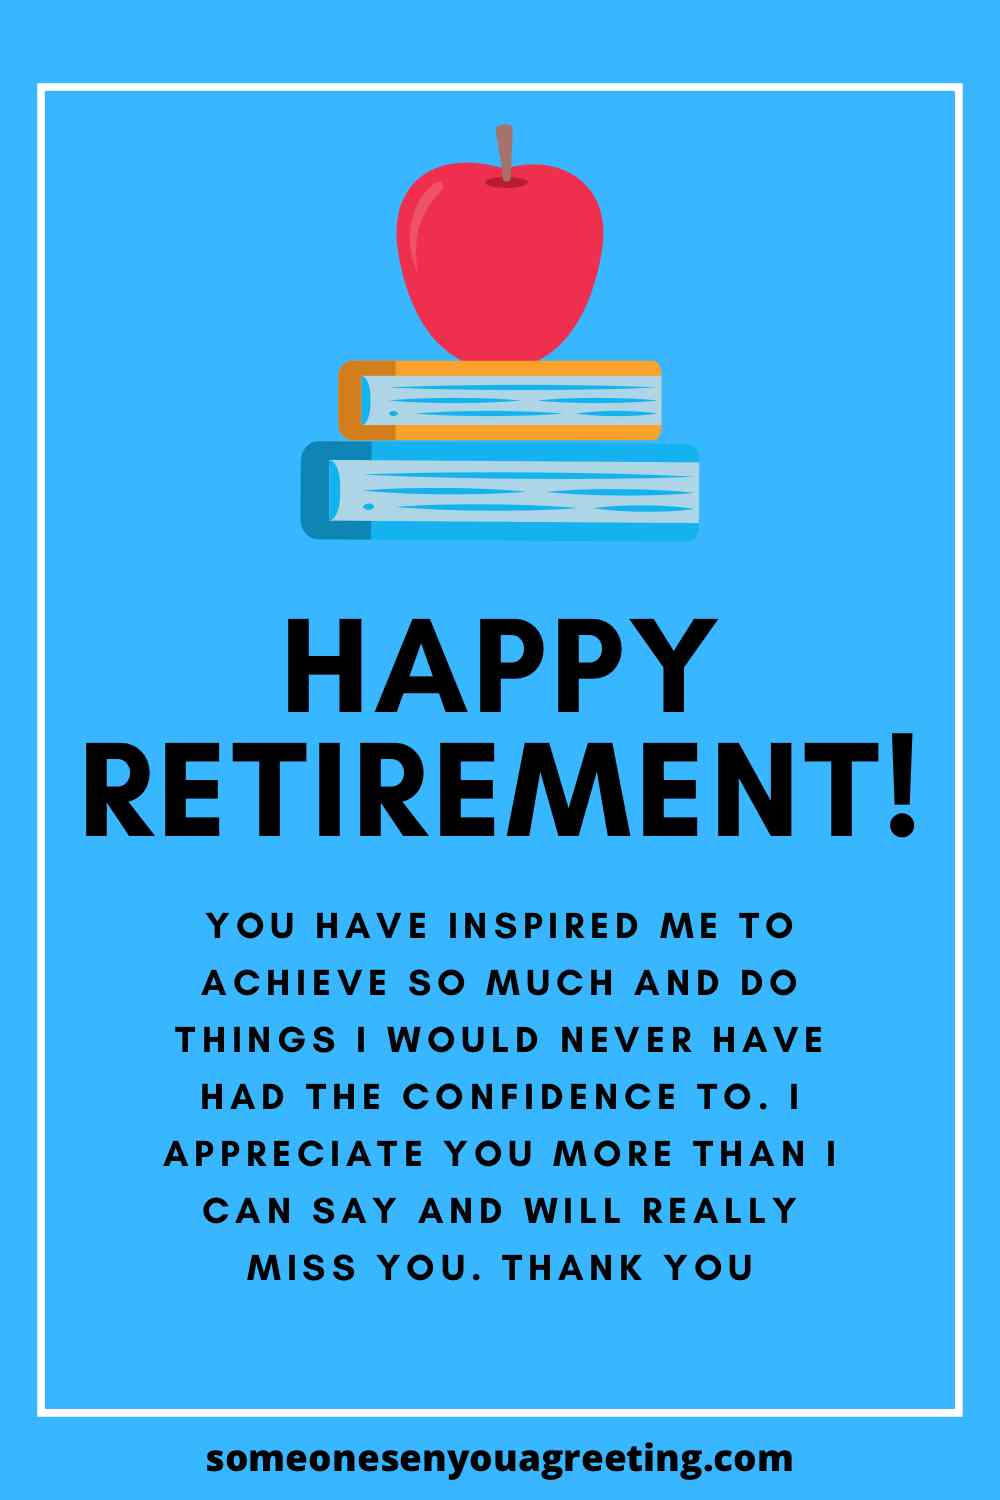 Happy retirement message for teacher